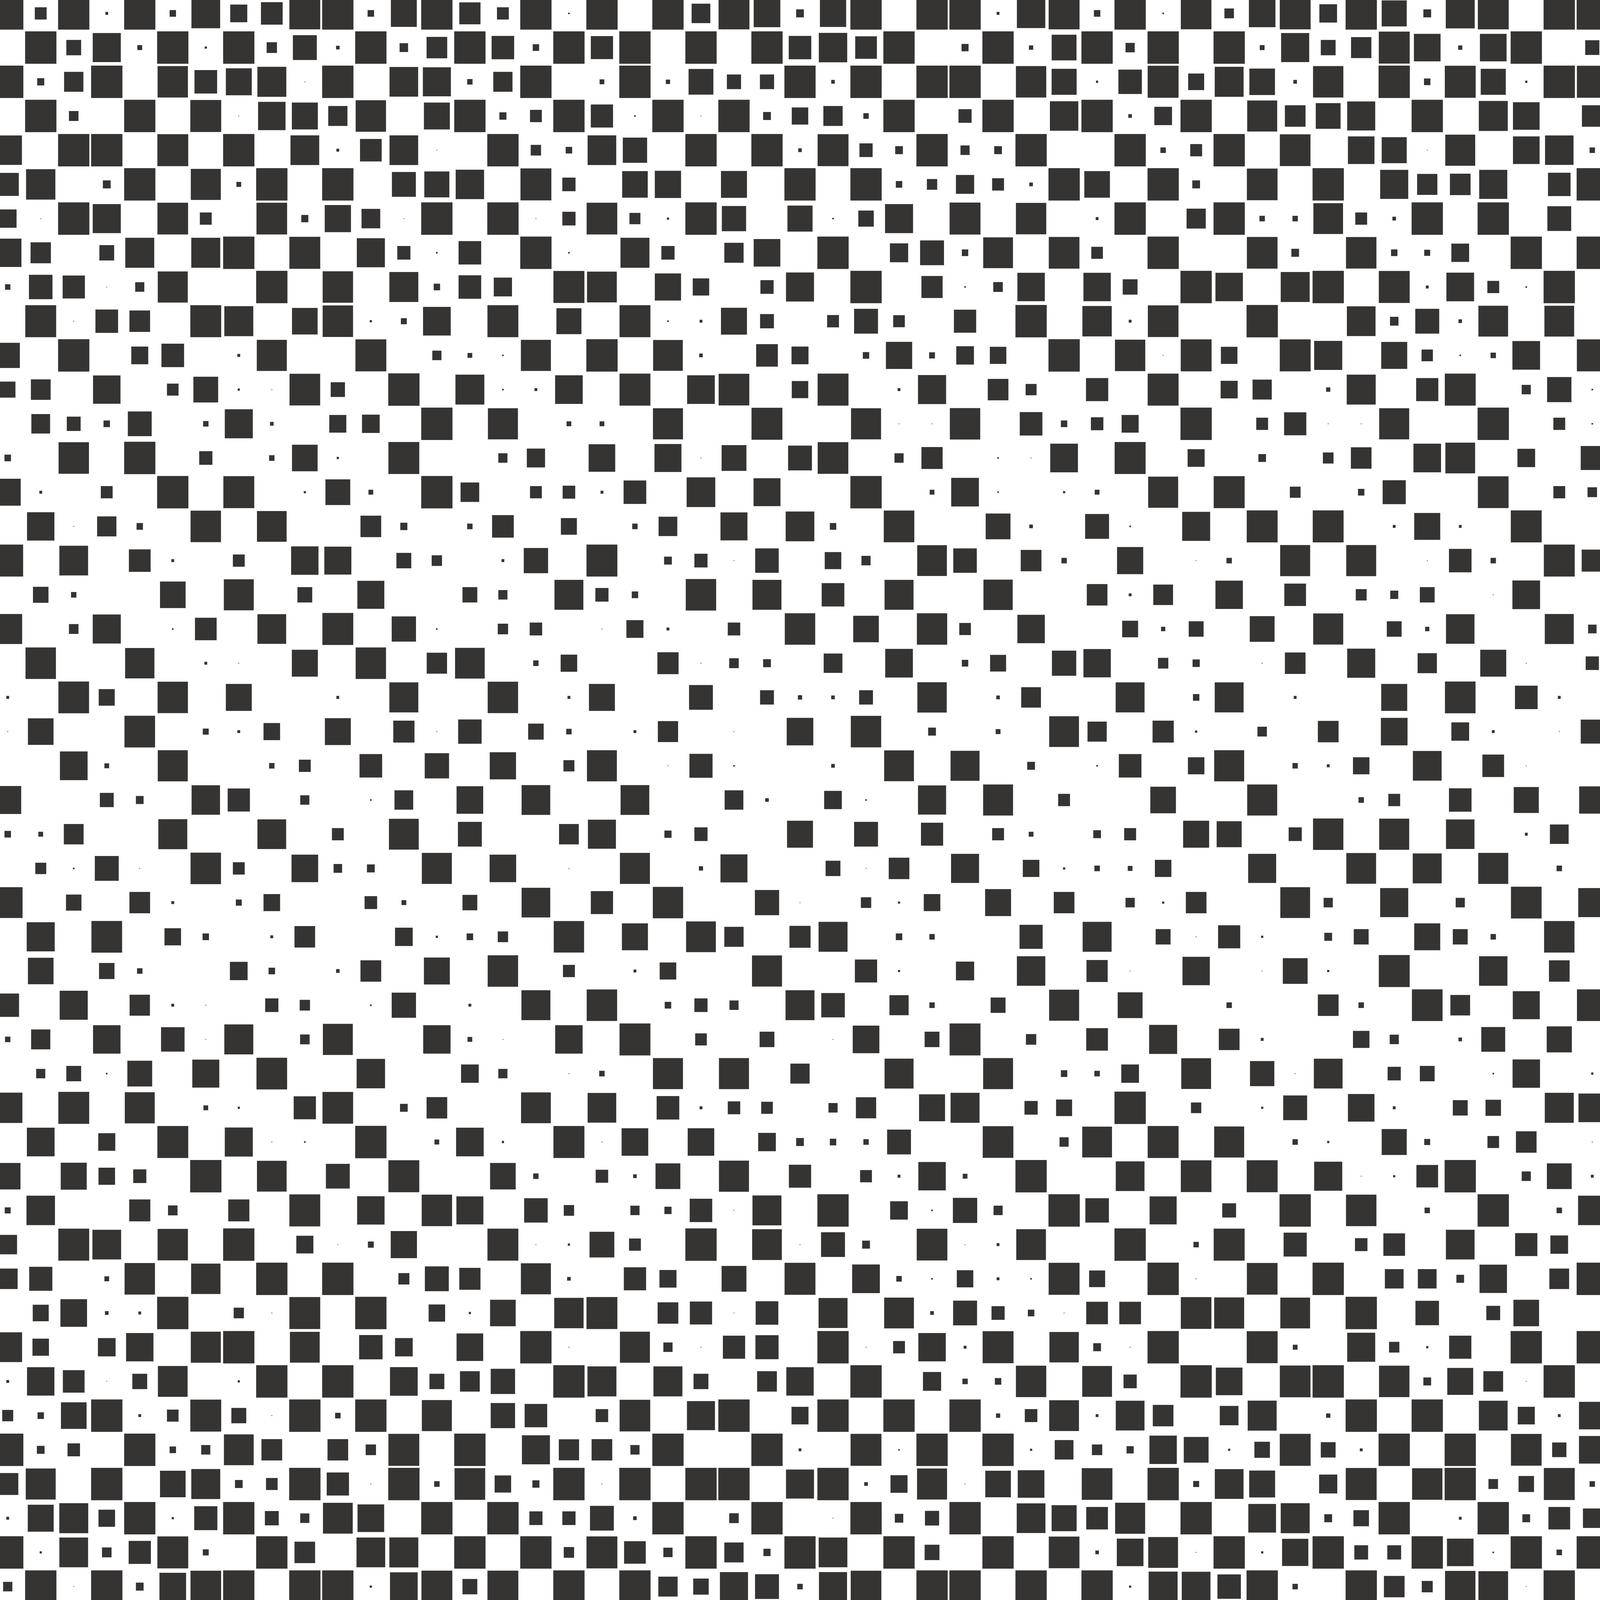 Black and white pattern by Valeriya_Dor